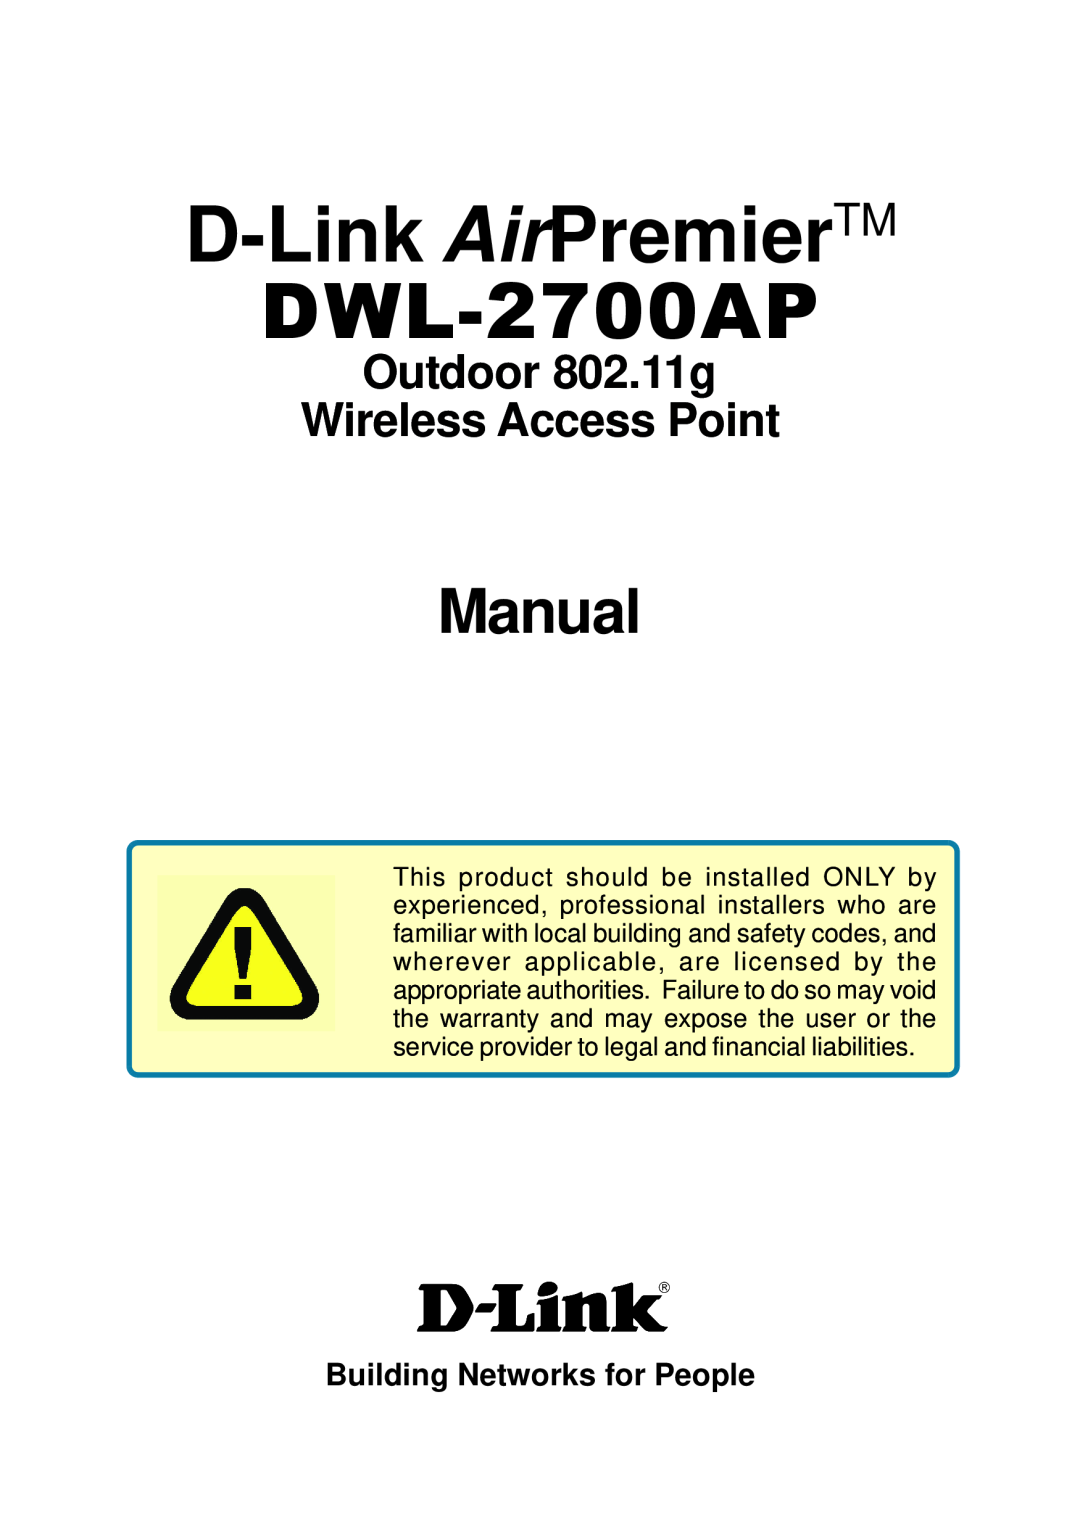 D-Link DWL-2700AP warranty D-Link AirPremierTM, Manual, Outdoor 802.11g Wireless Access Point 